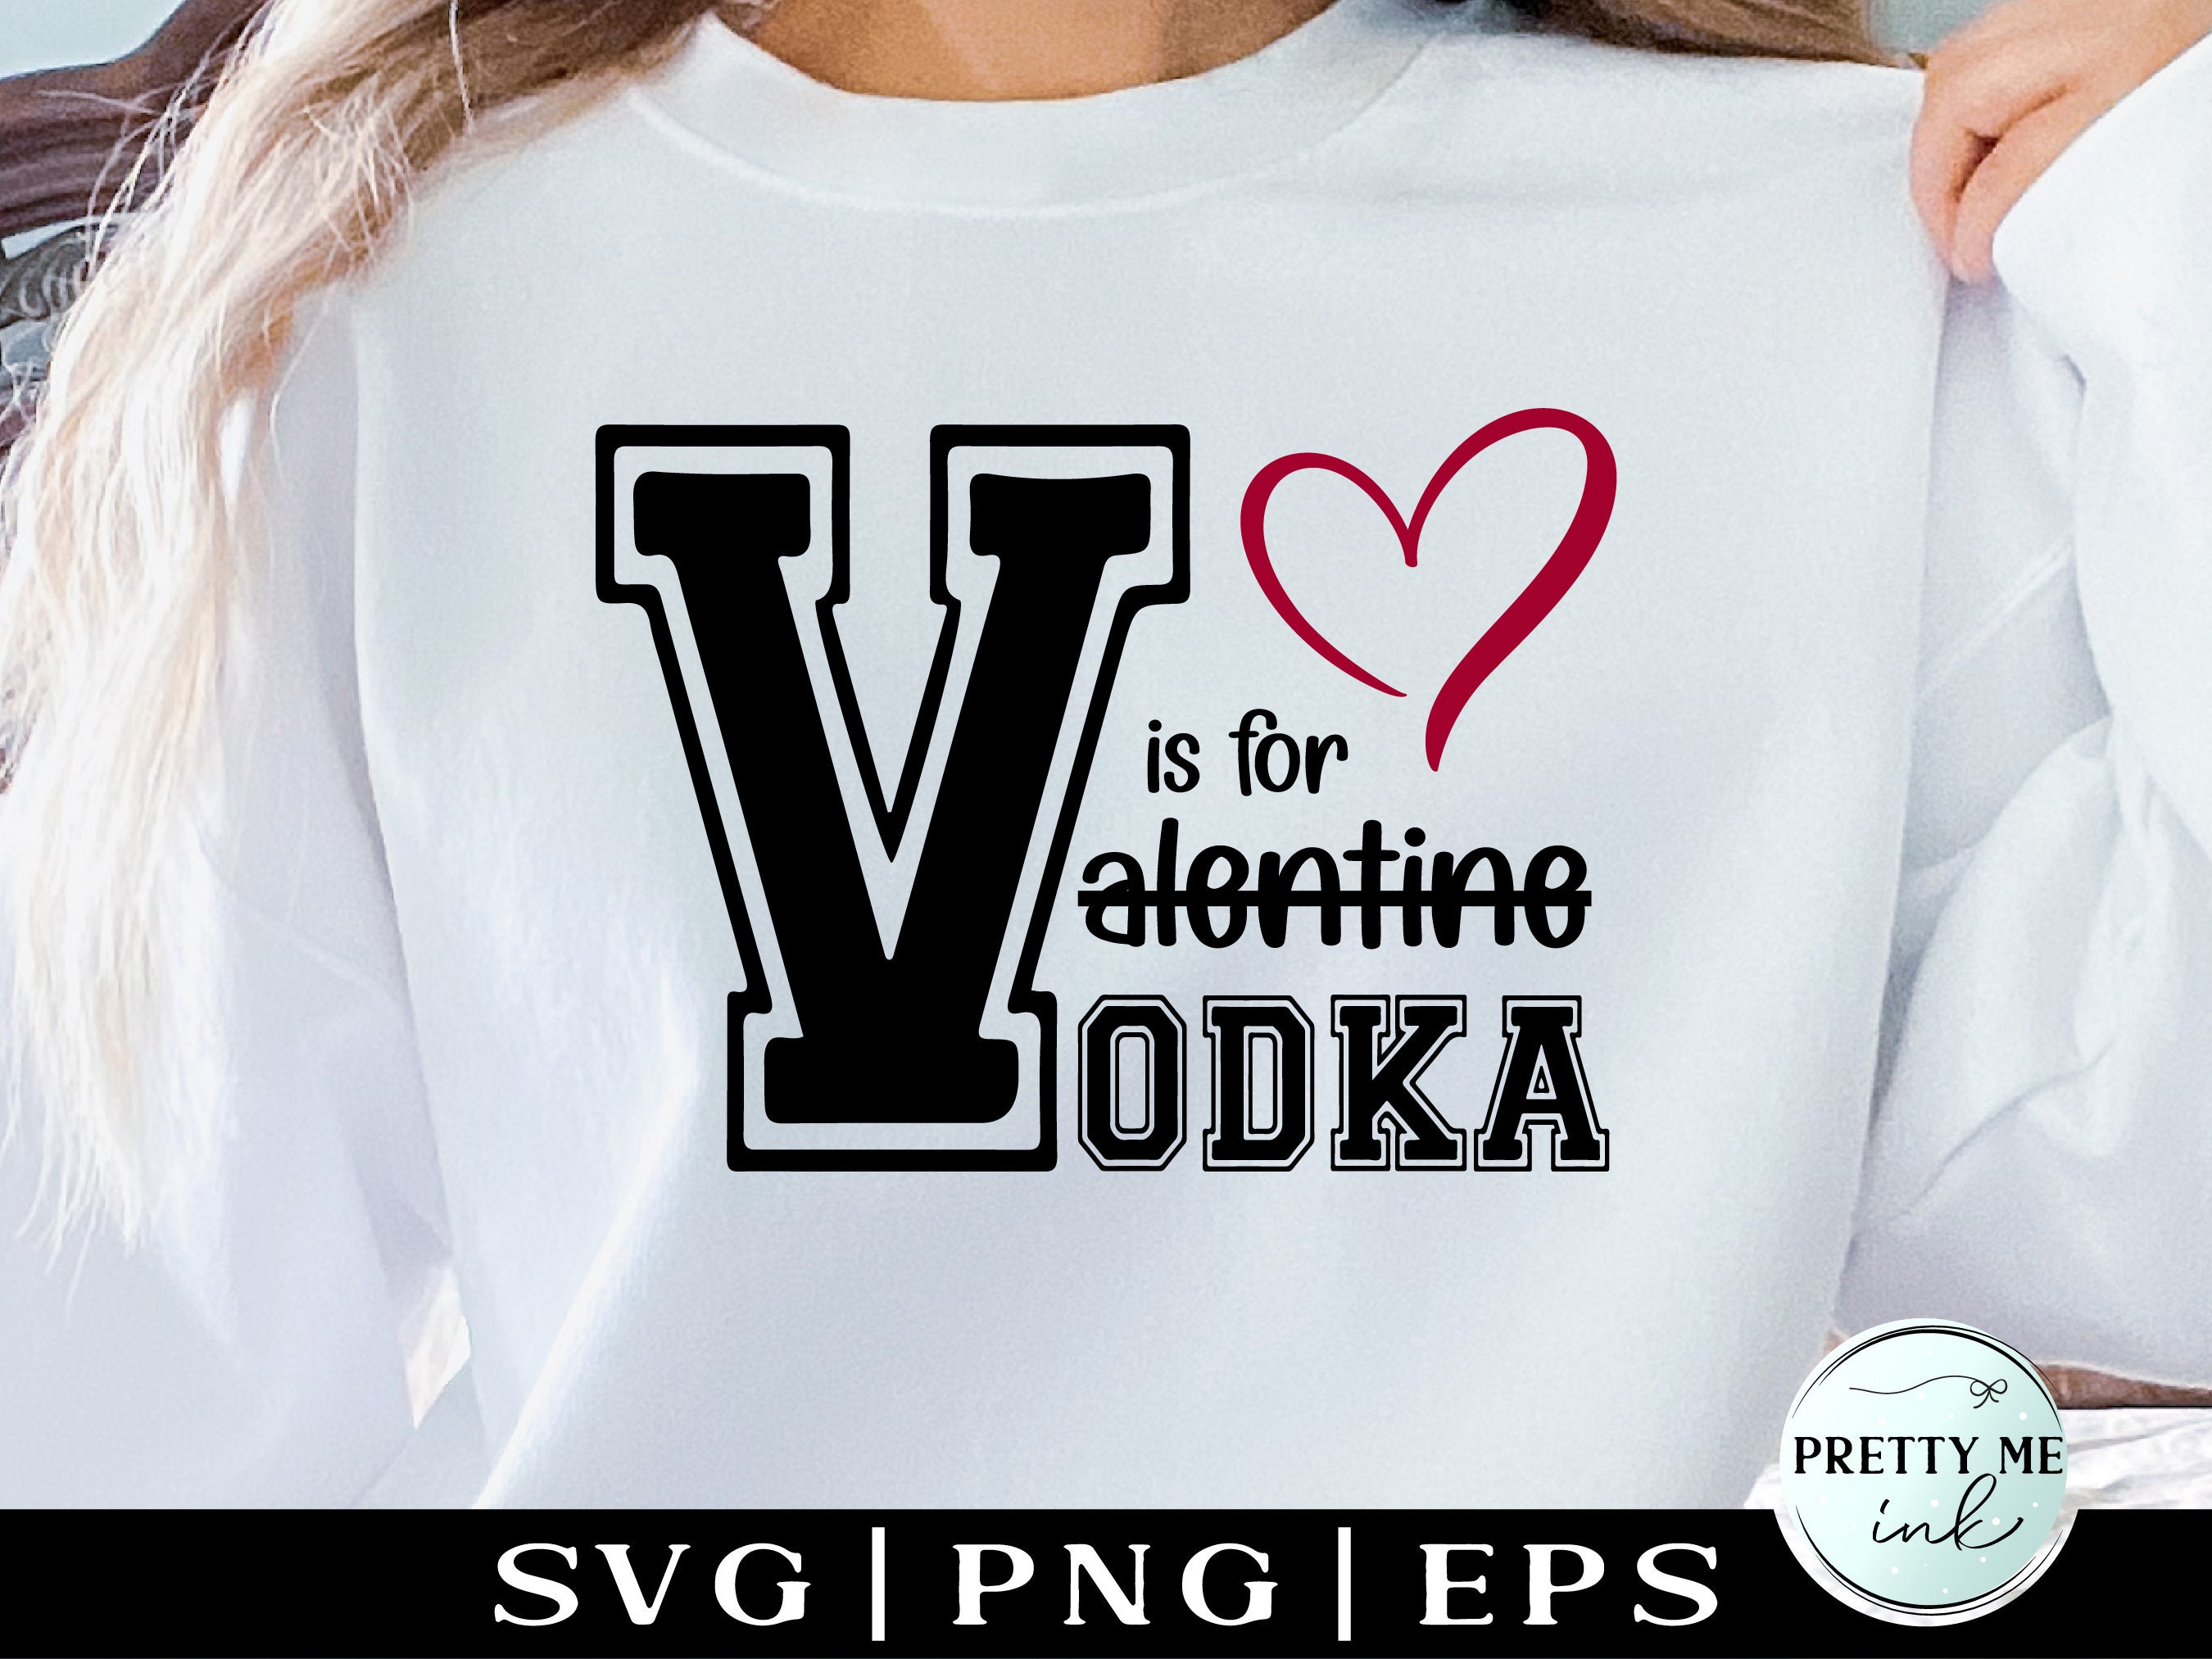 I Love You More Than Vodka Just Kidding Wodka Drink Lover T-Shirt